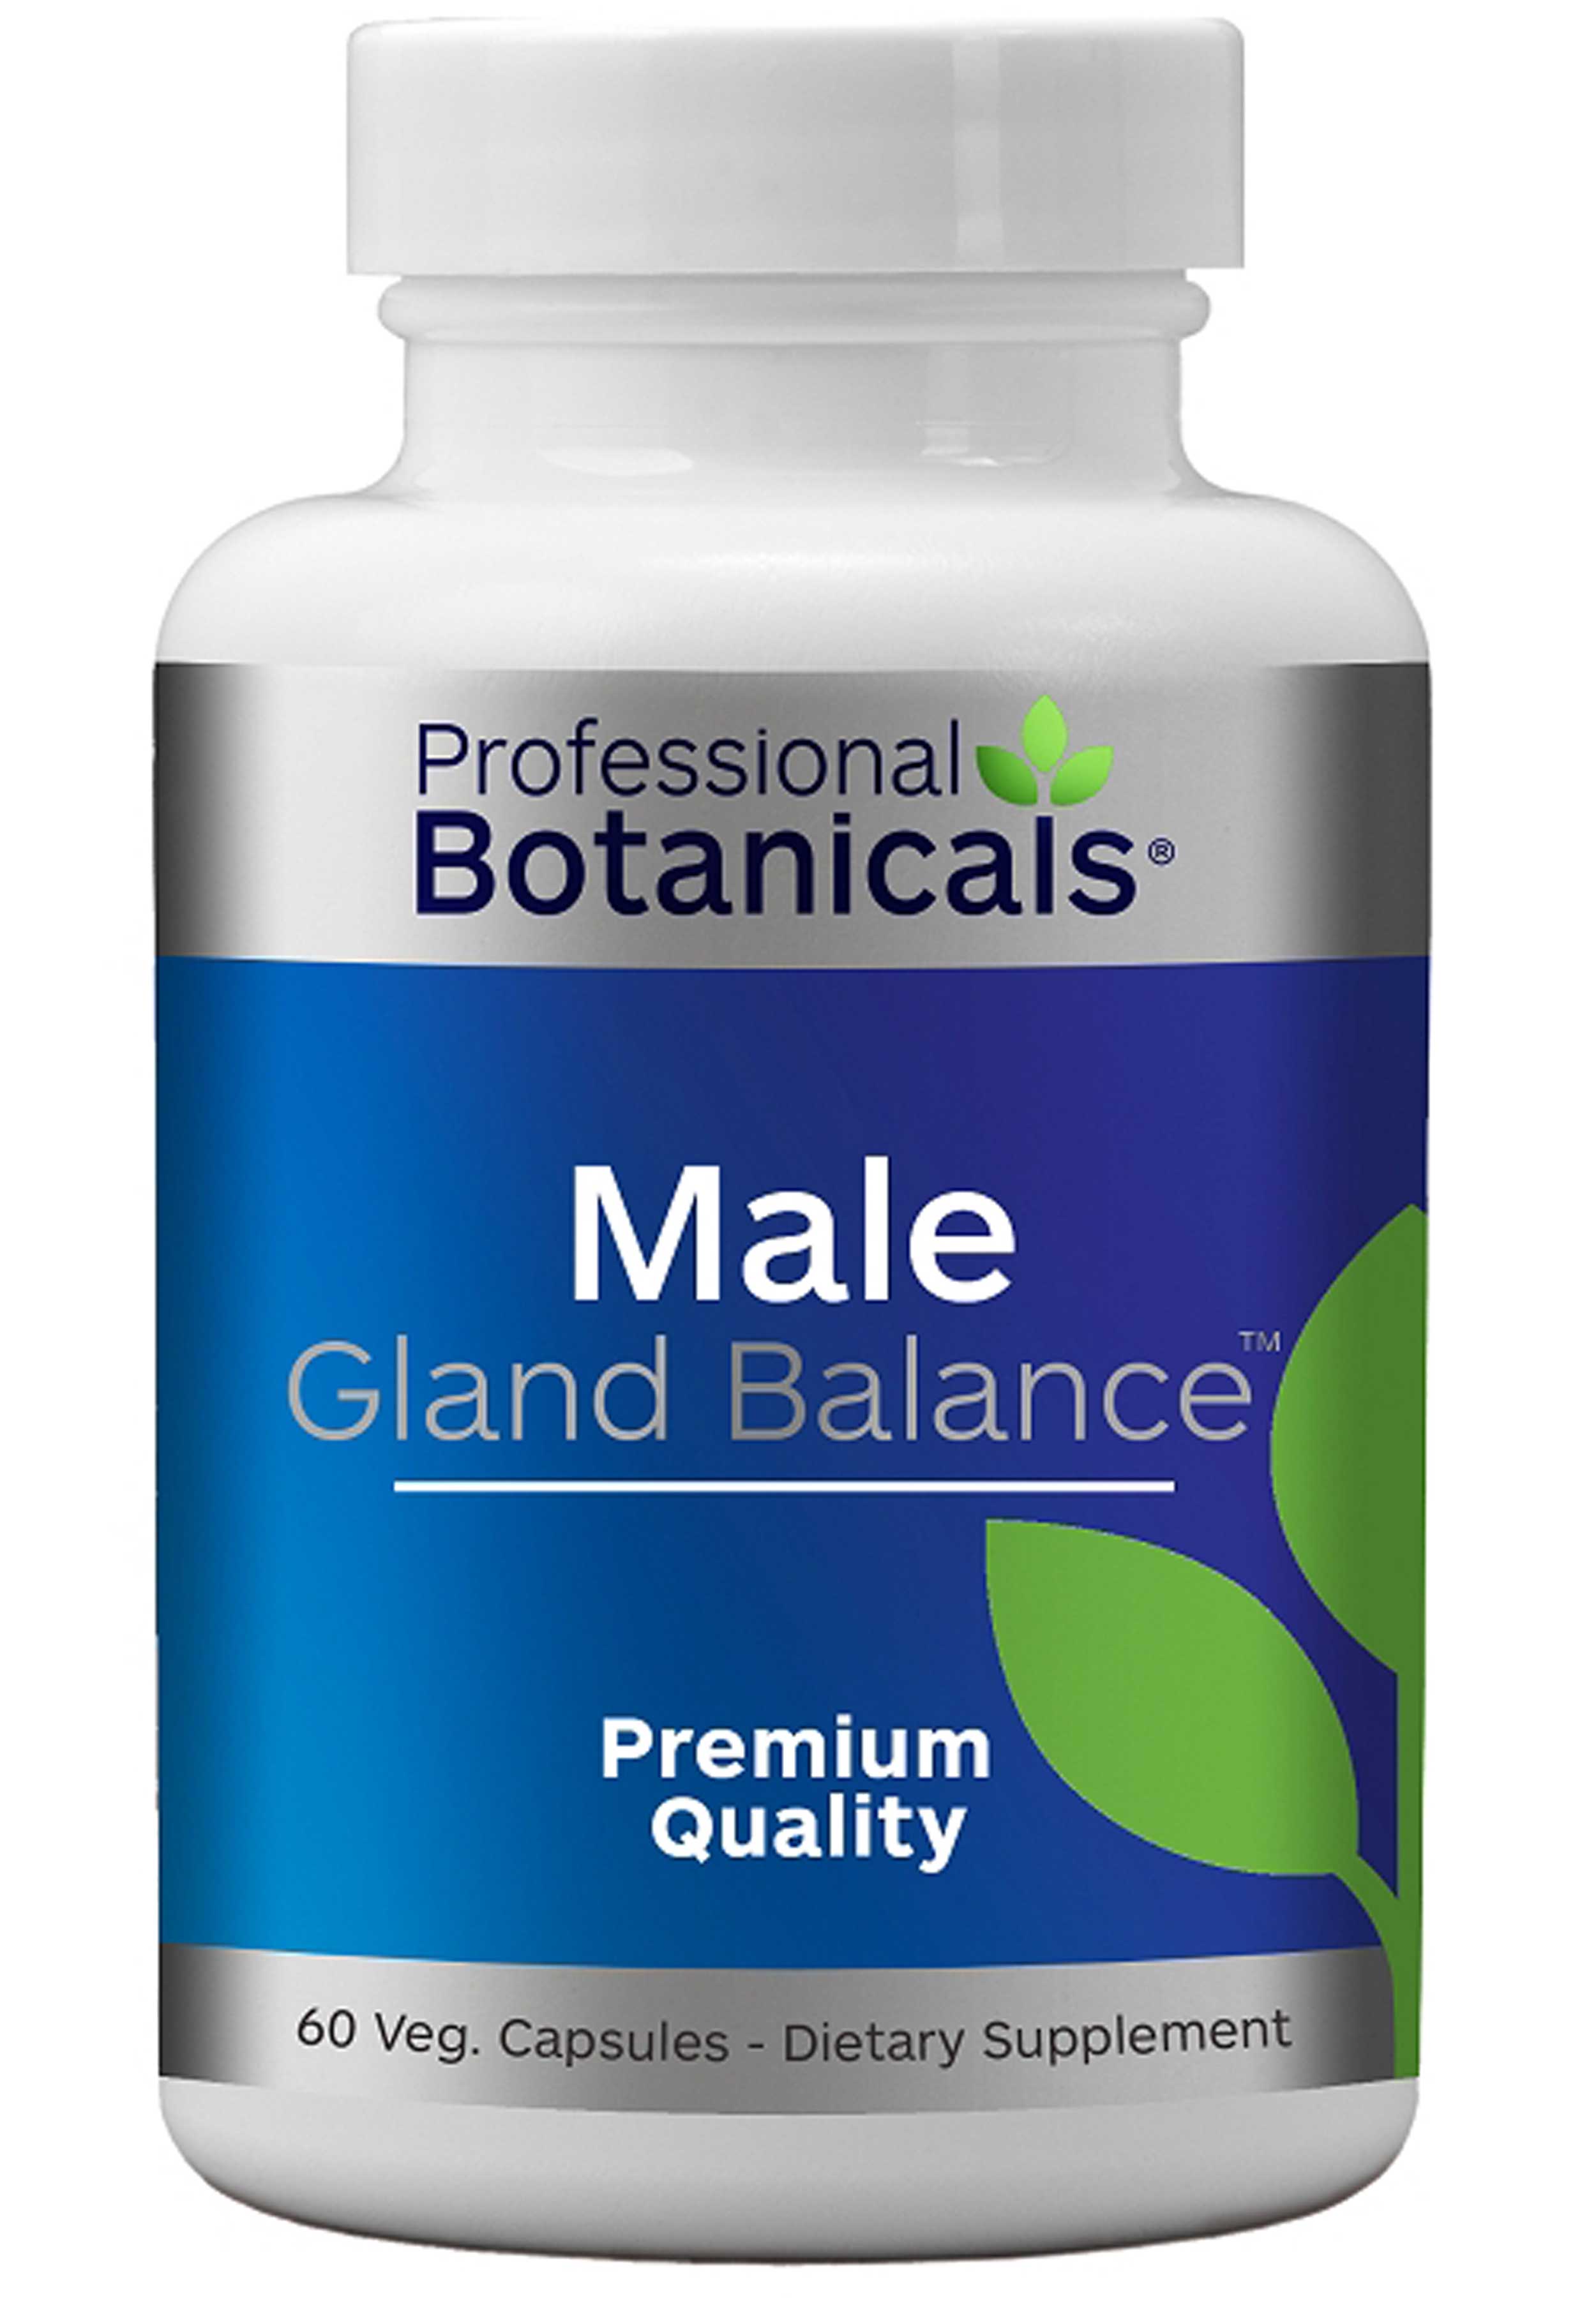 Professional Botanicals Male Gland Balance